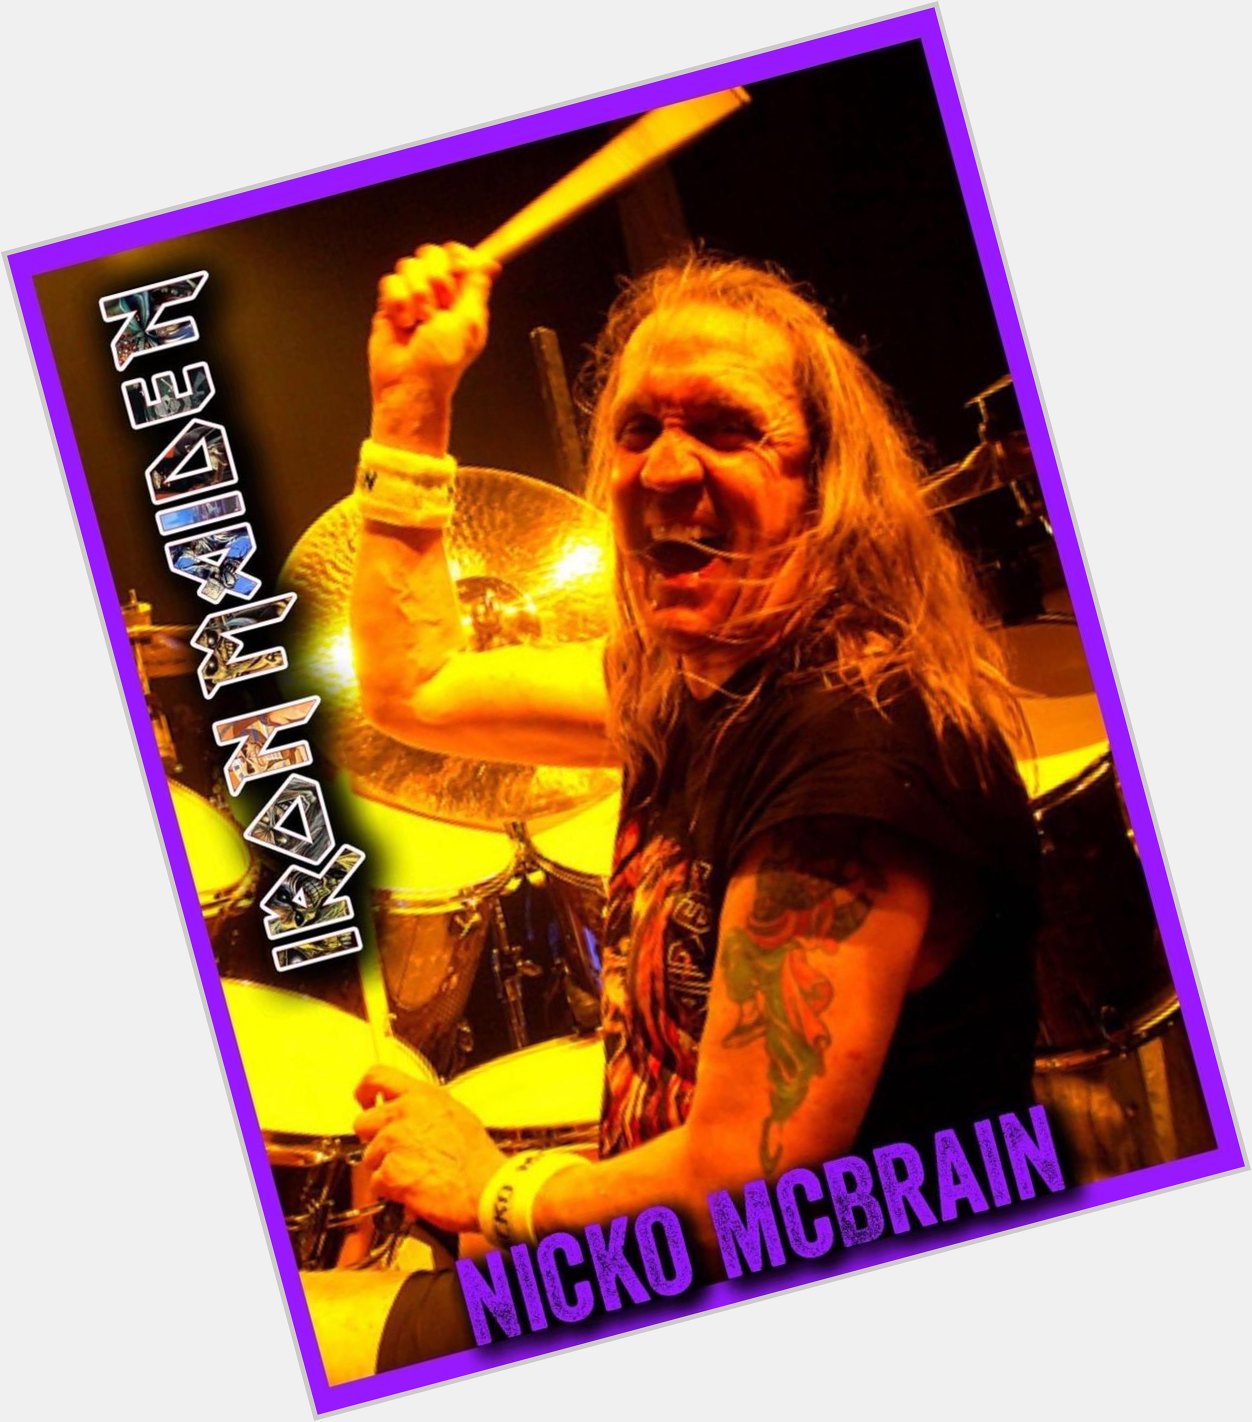 Happy Birthday Nicko McBrain Drummer for Iron Maiden June 5, 1952 London, England 